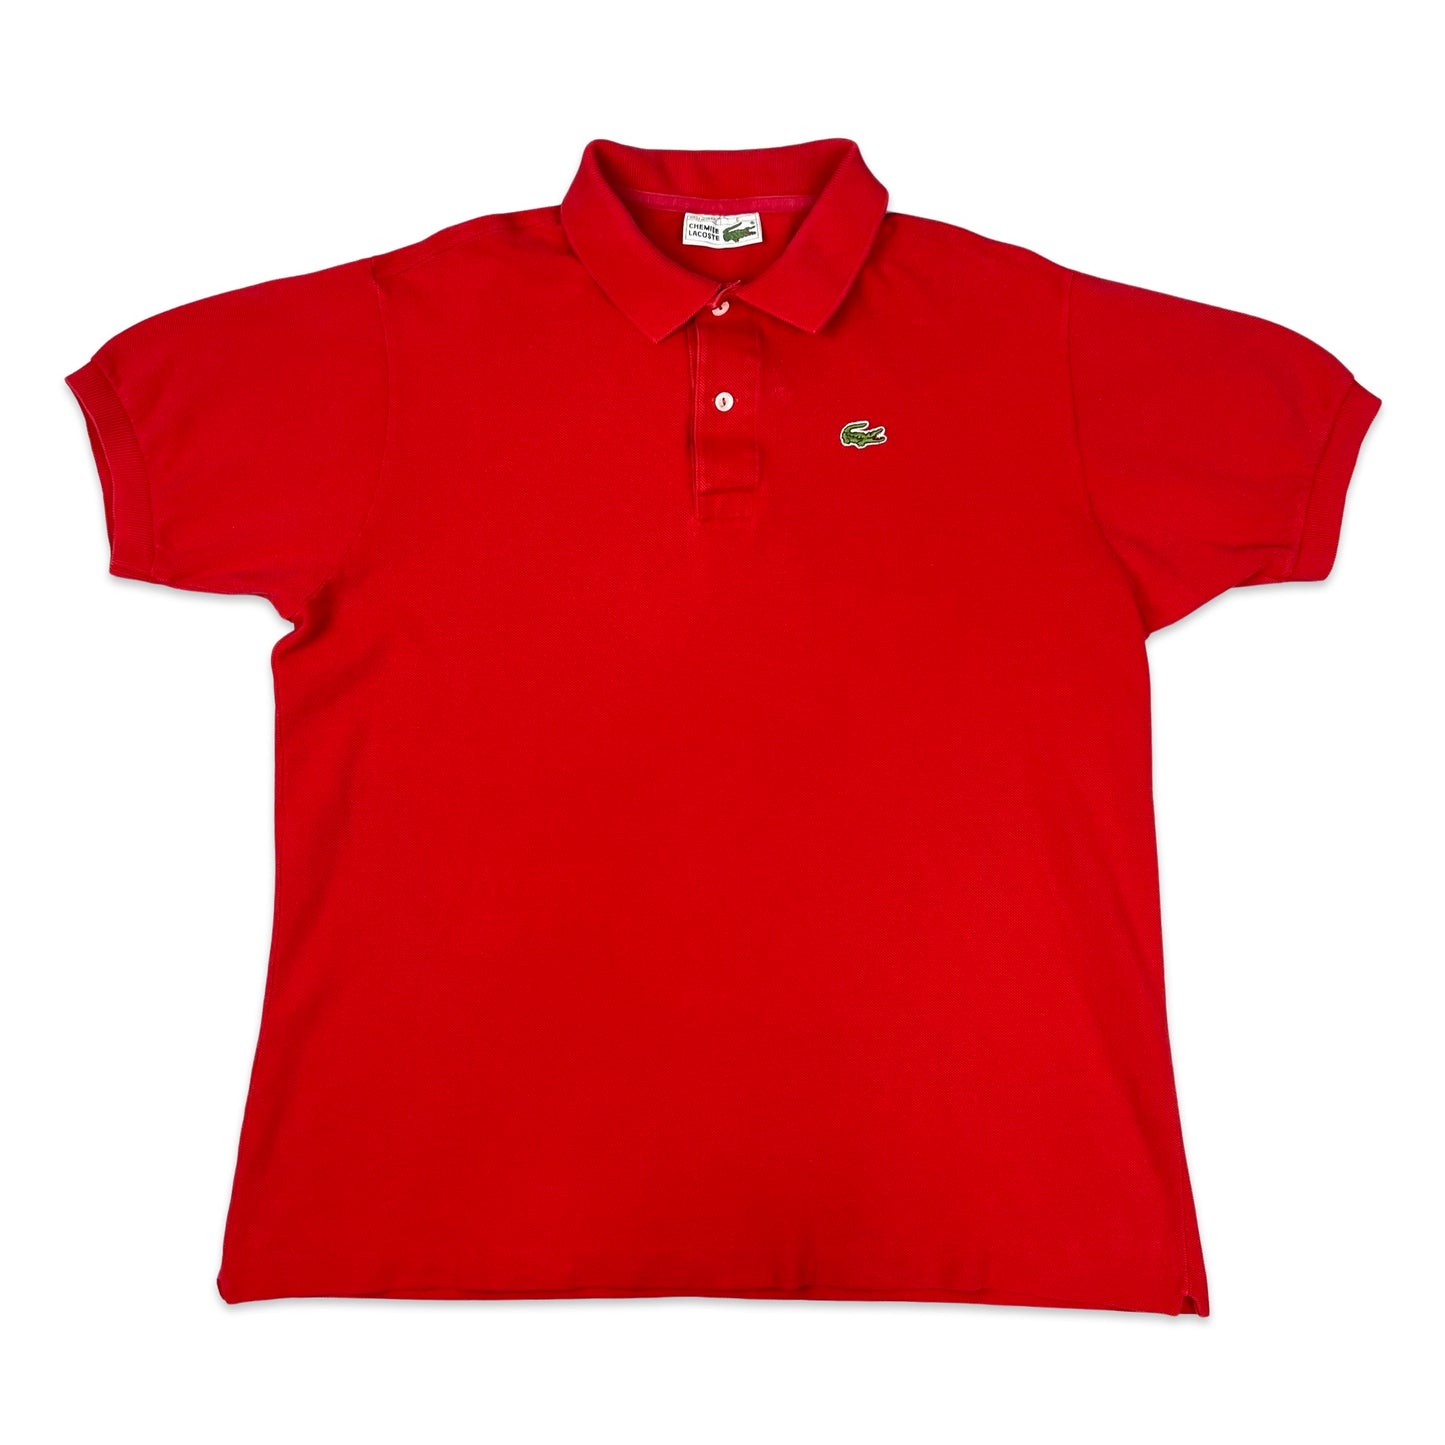 Vintage 80s Chemise Lacoste Red Polo Shirt M L